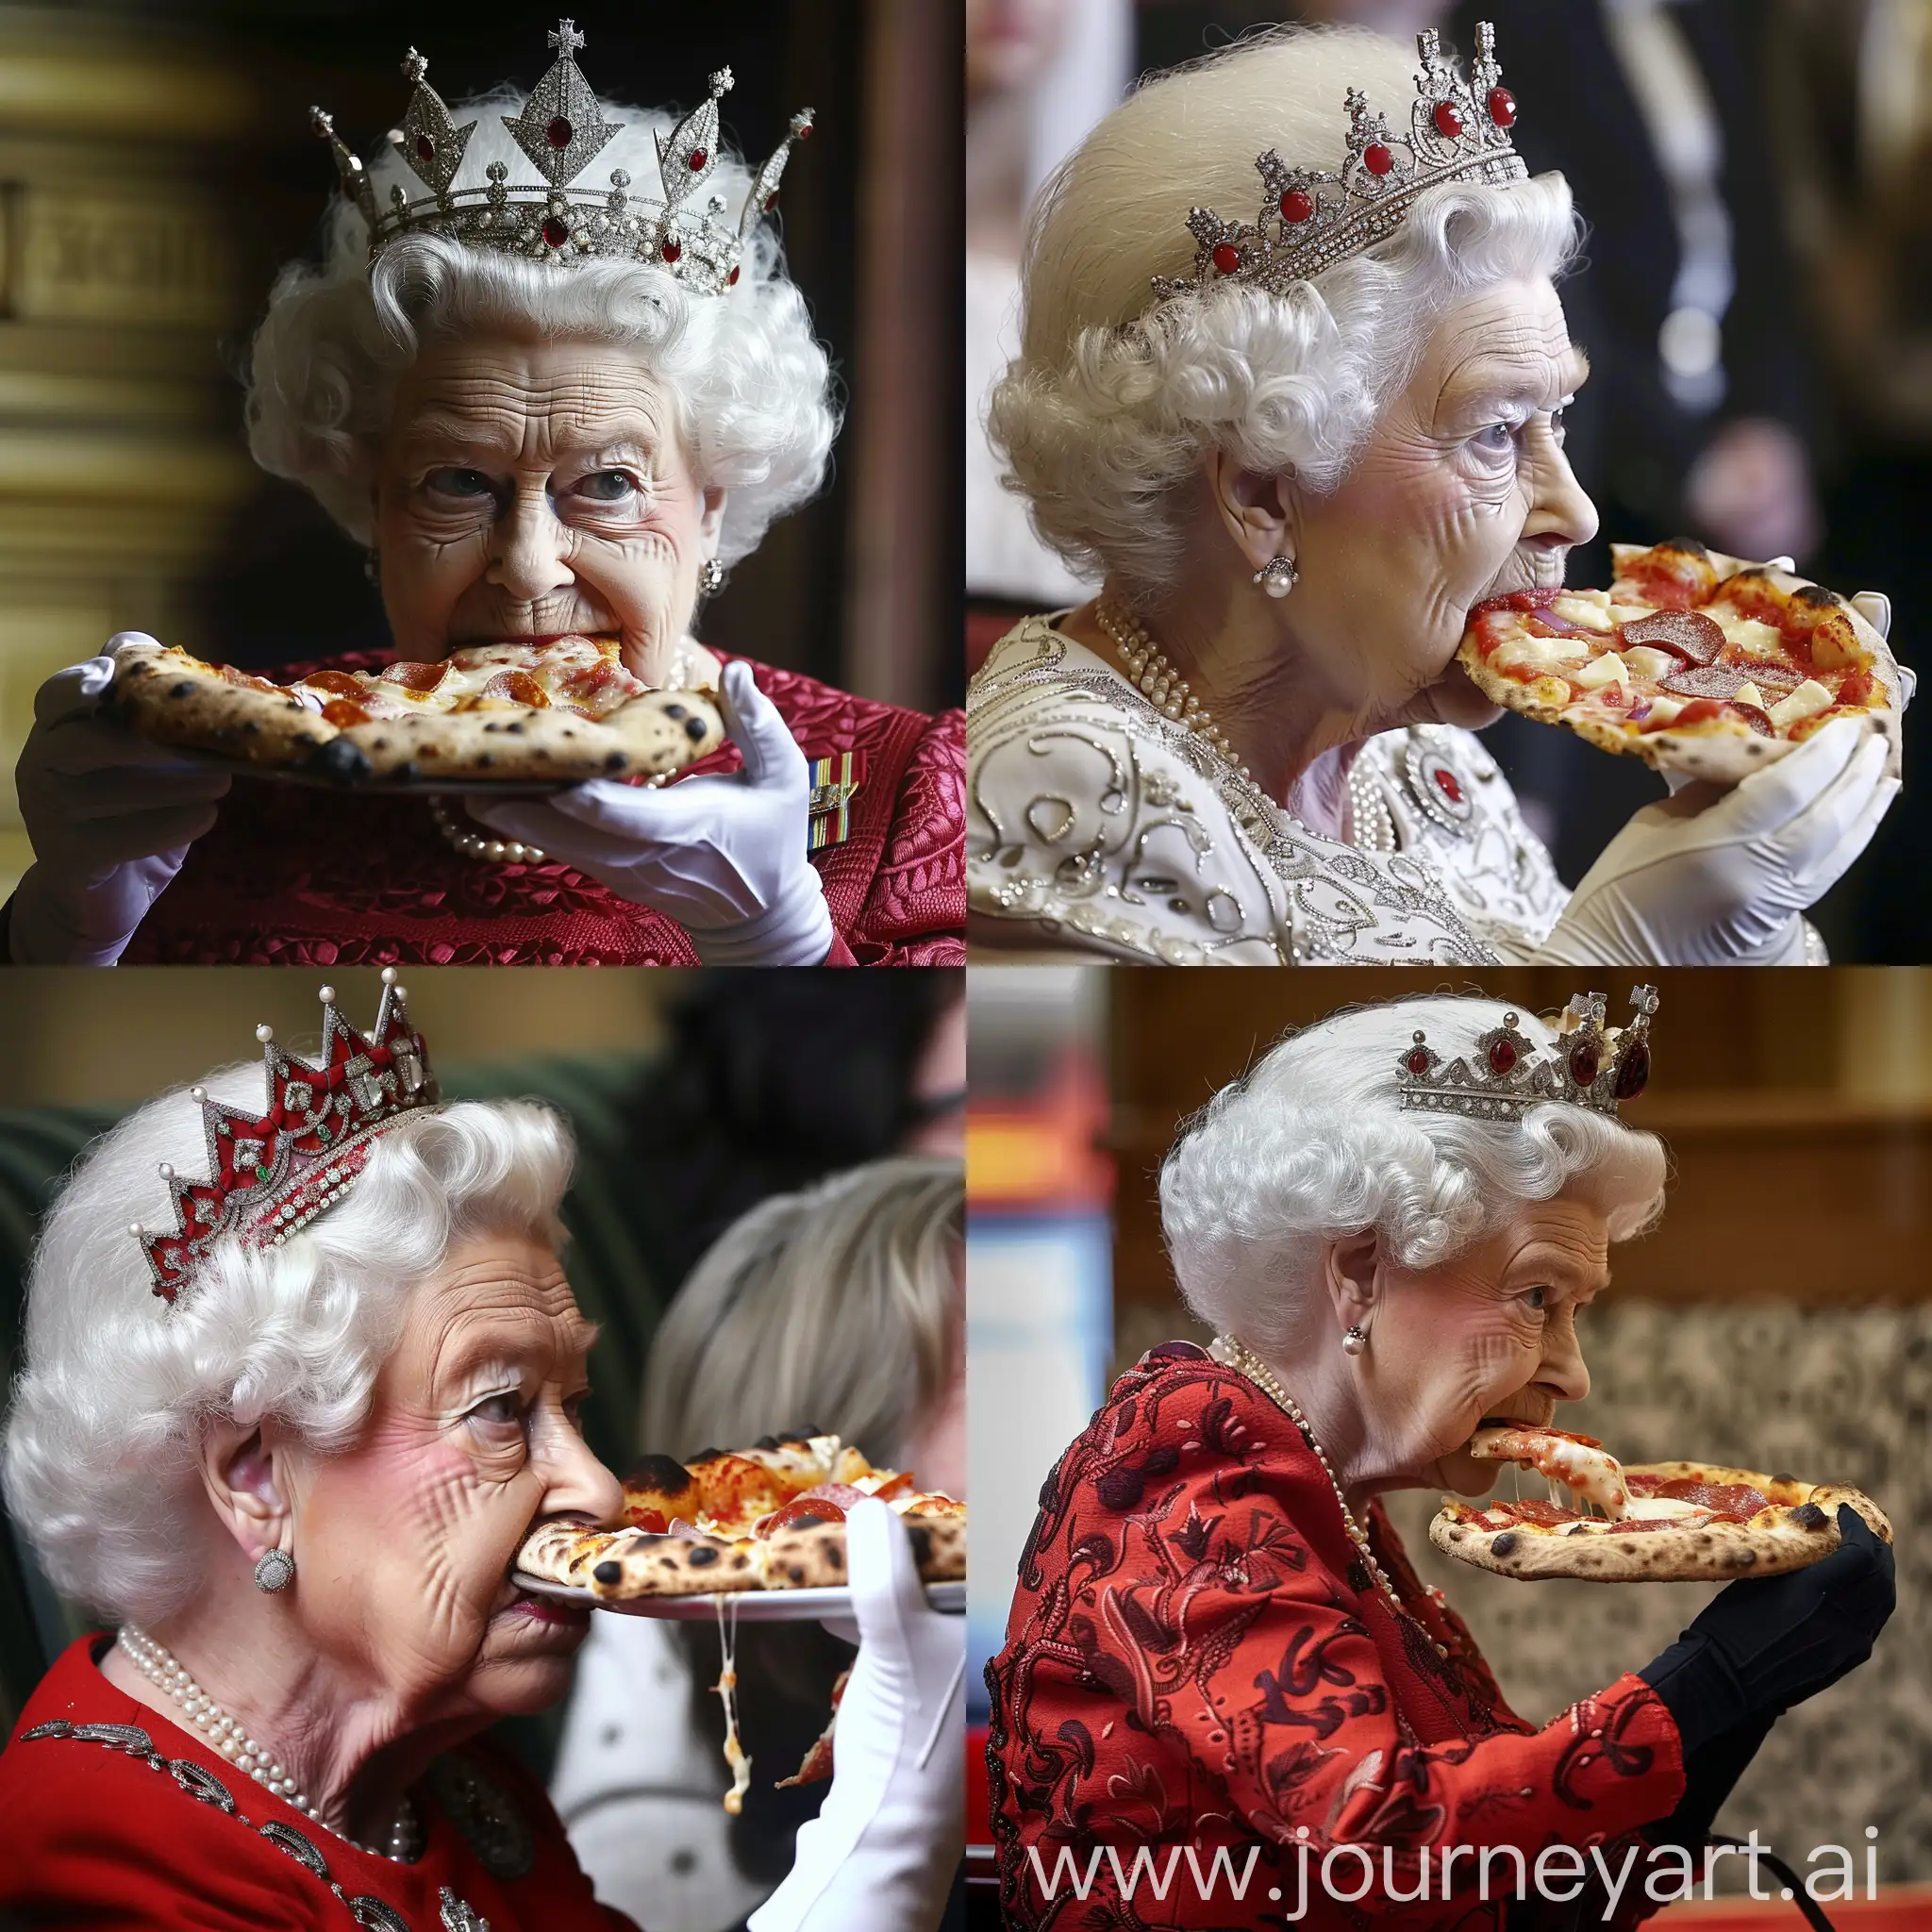 Royal-Pizza-Delight-with-Queen-Elizabeth-II